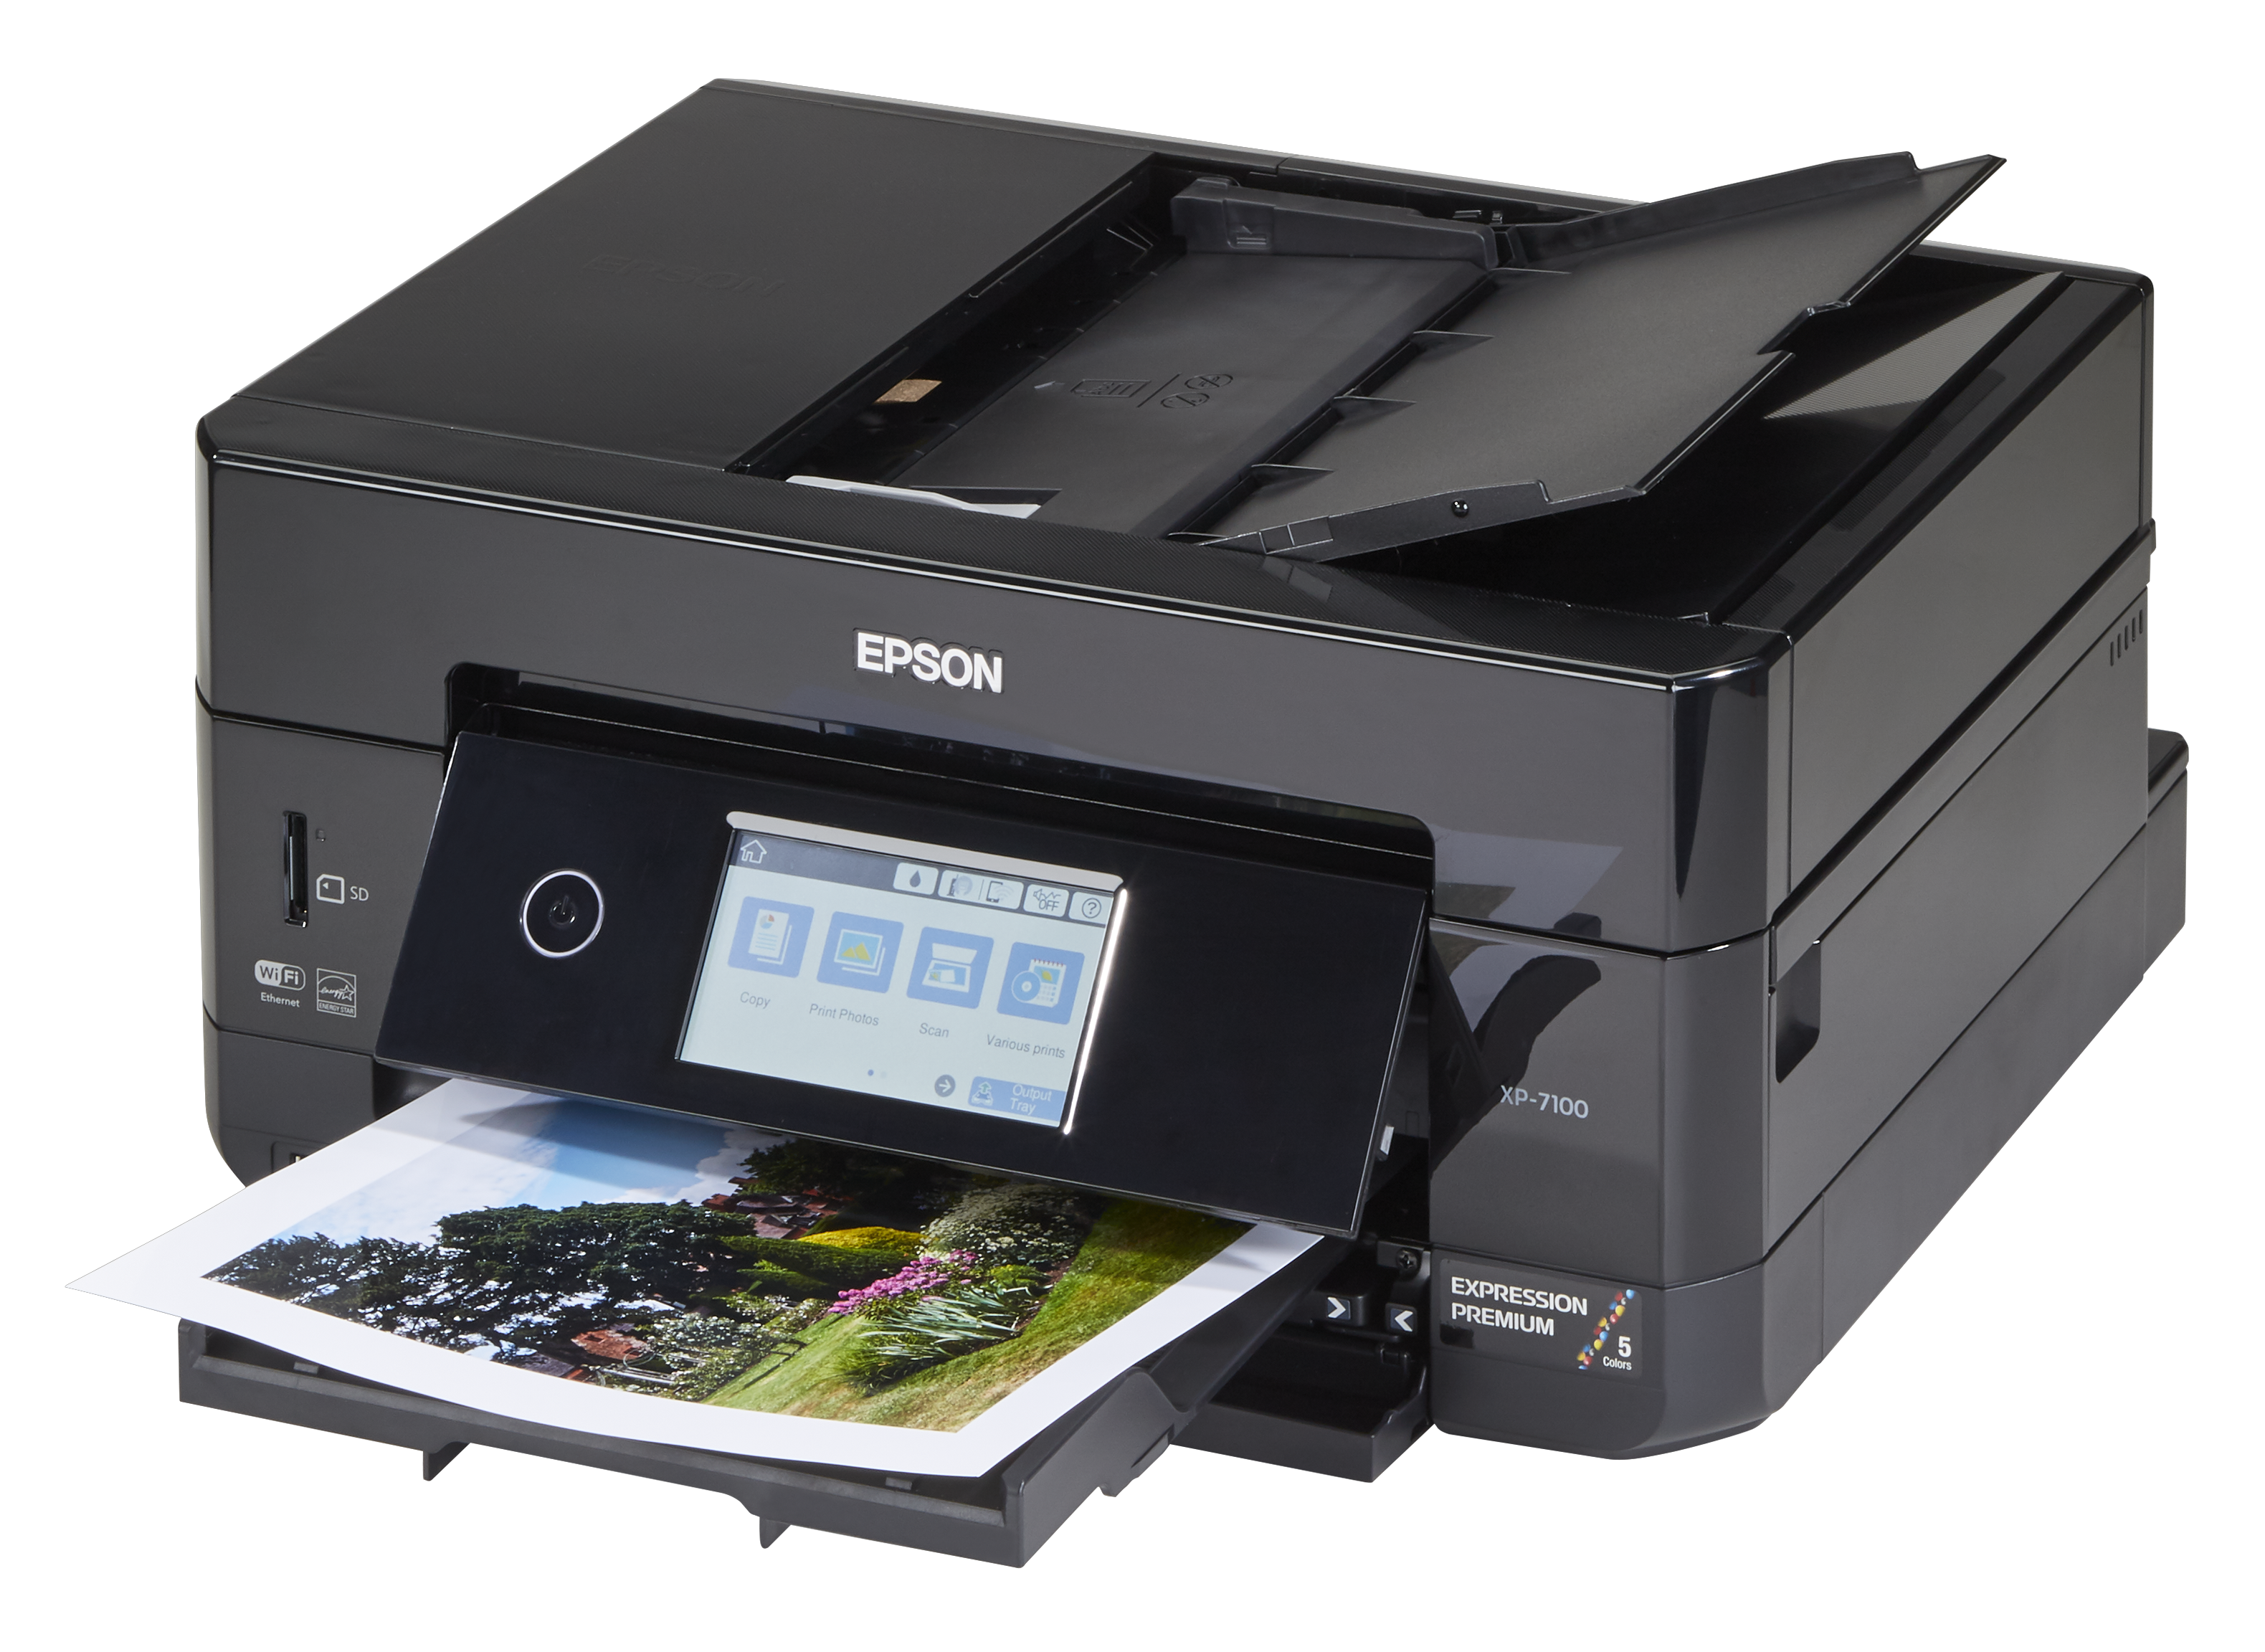 Epson Premium XP-7100 Printer Review - Consumer Reports